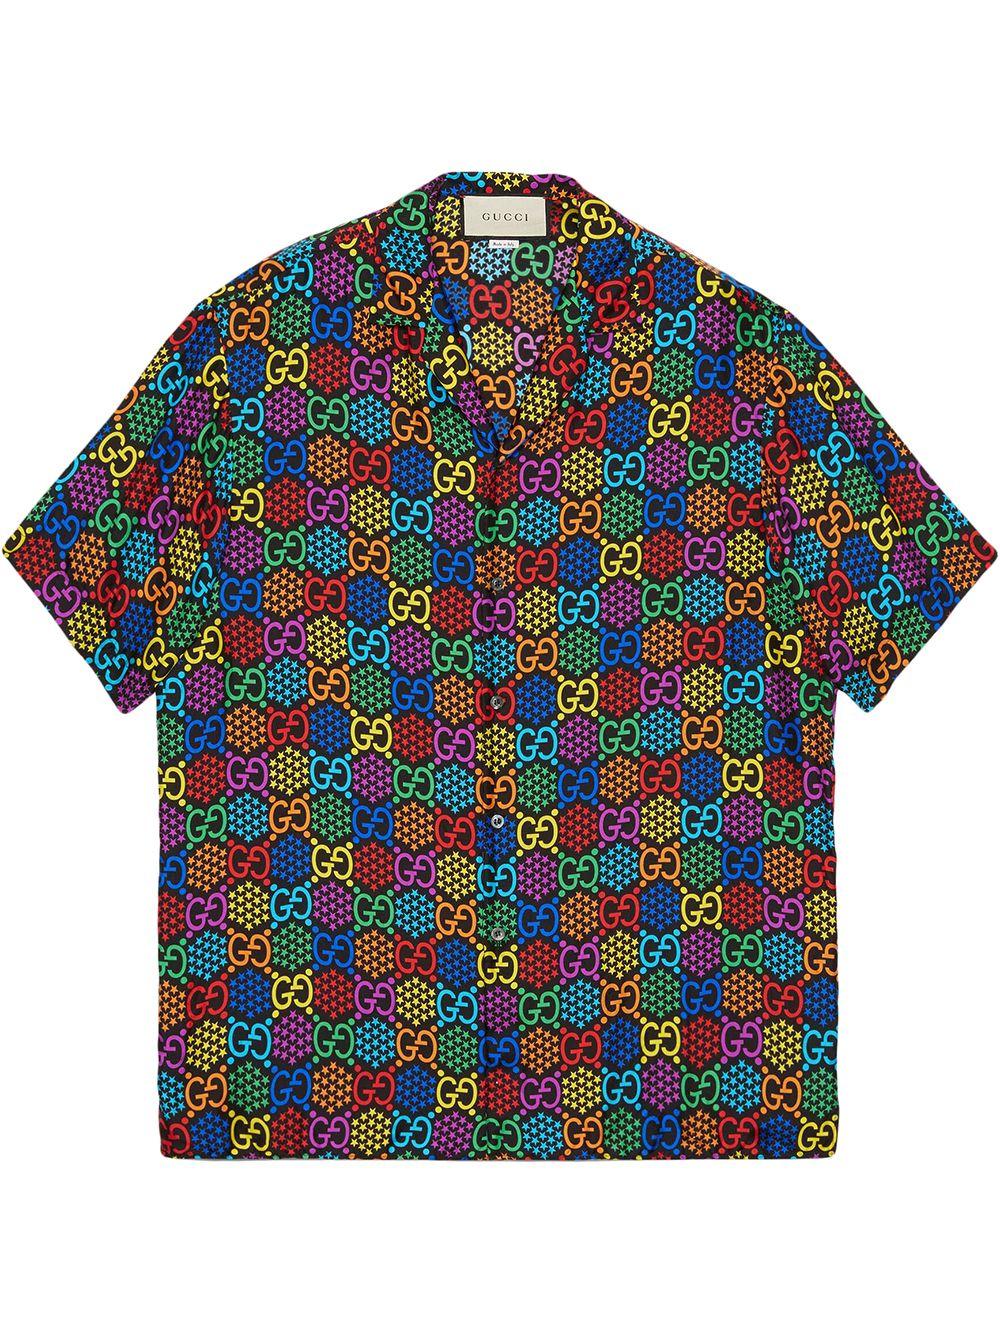 Gucci Men's Printed Bowling Cotton Shirt